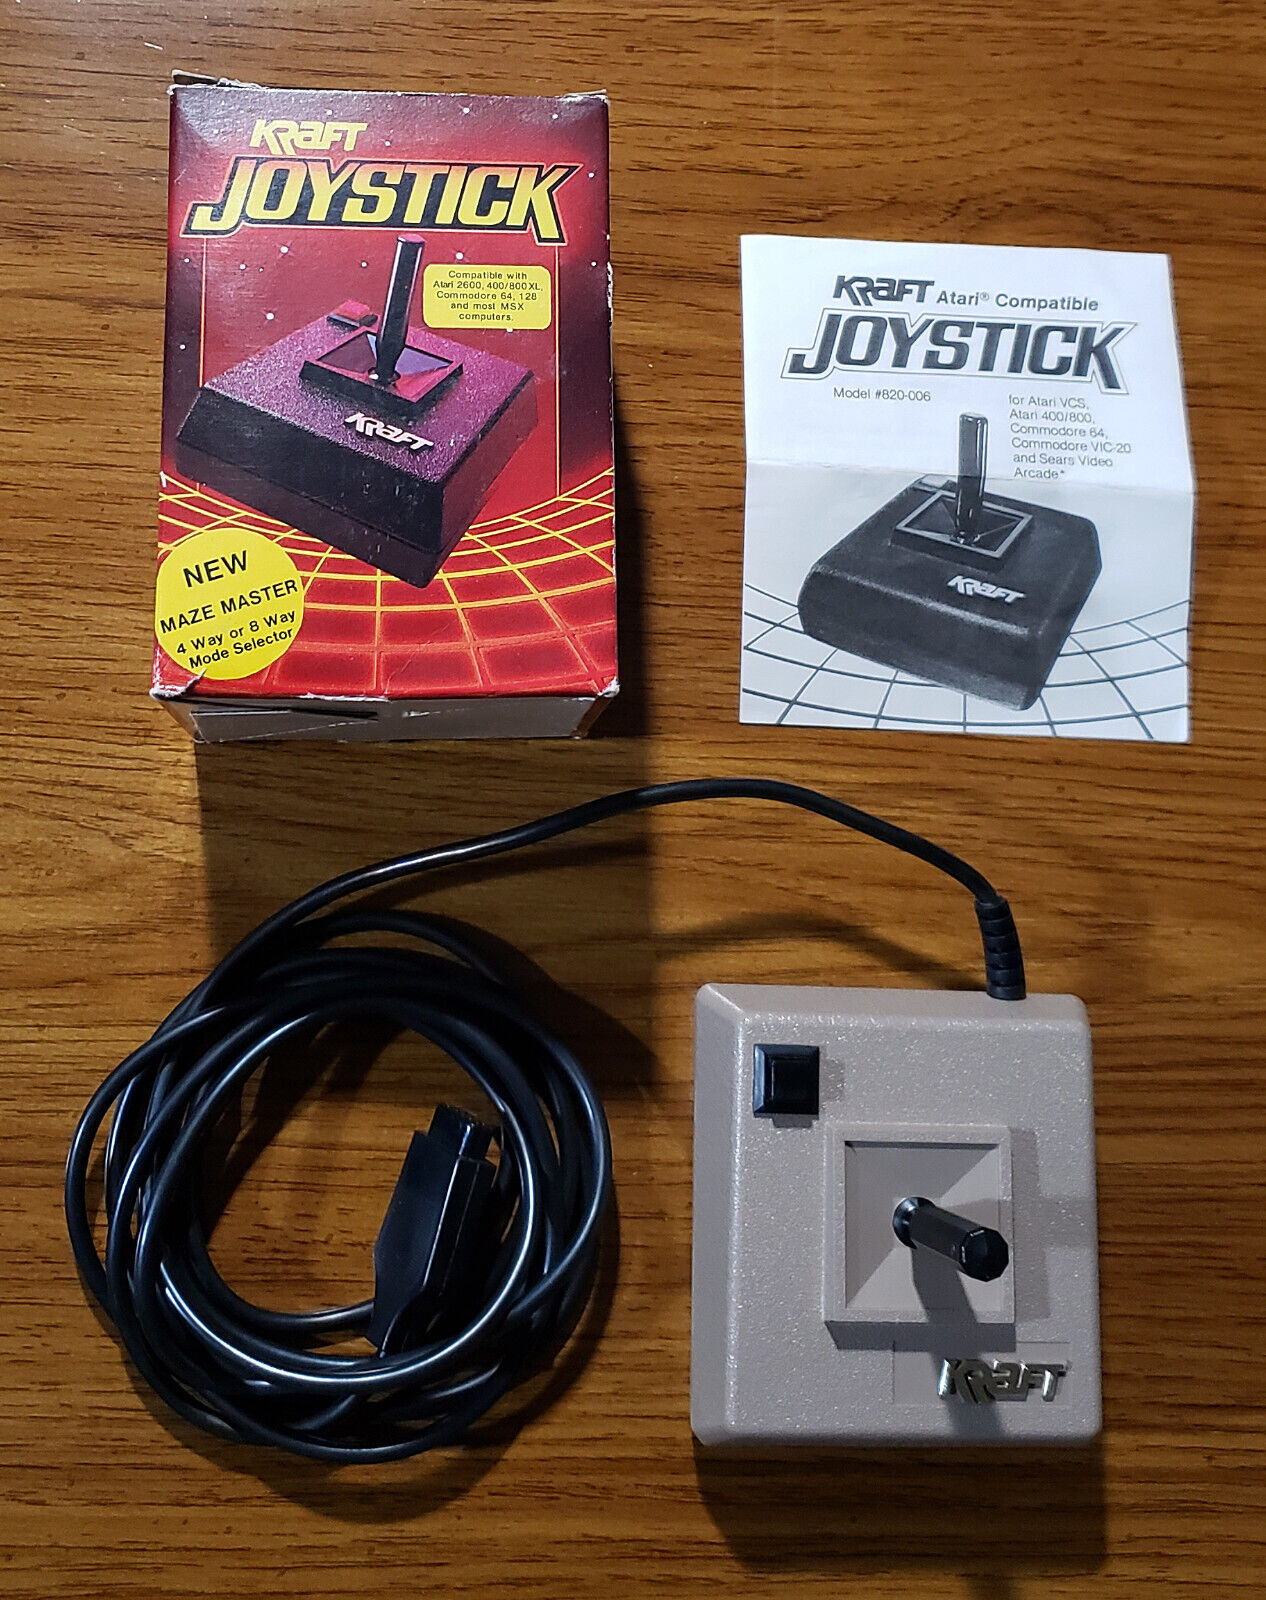 Kraft Maze Master joystick for Atari/Commodore/Amiga computers